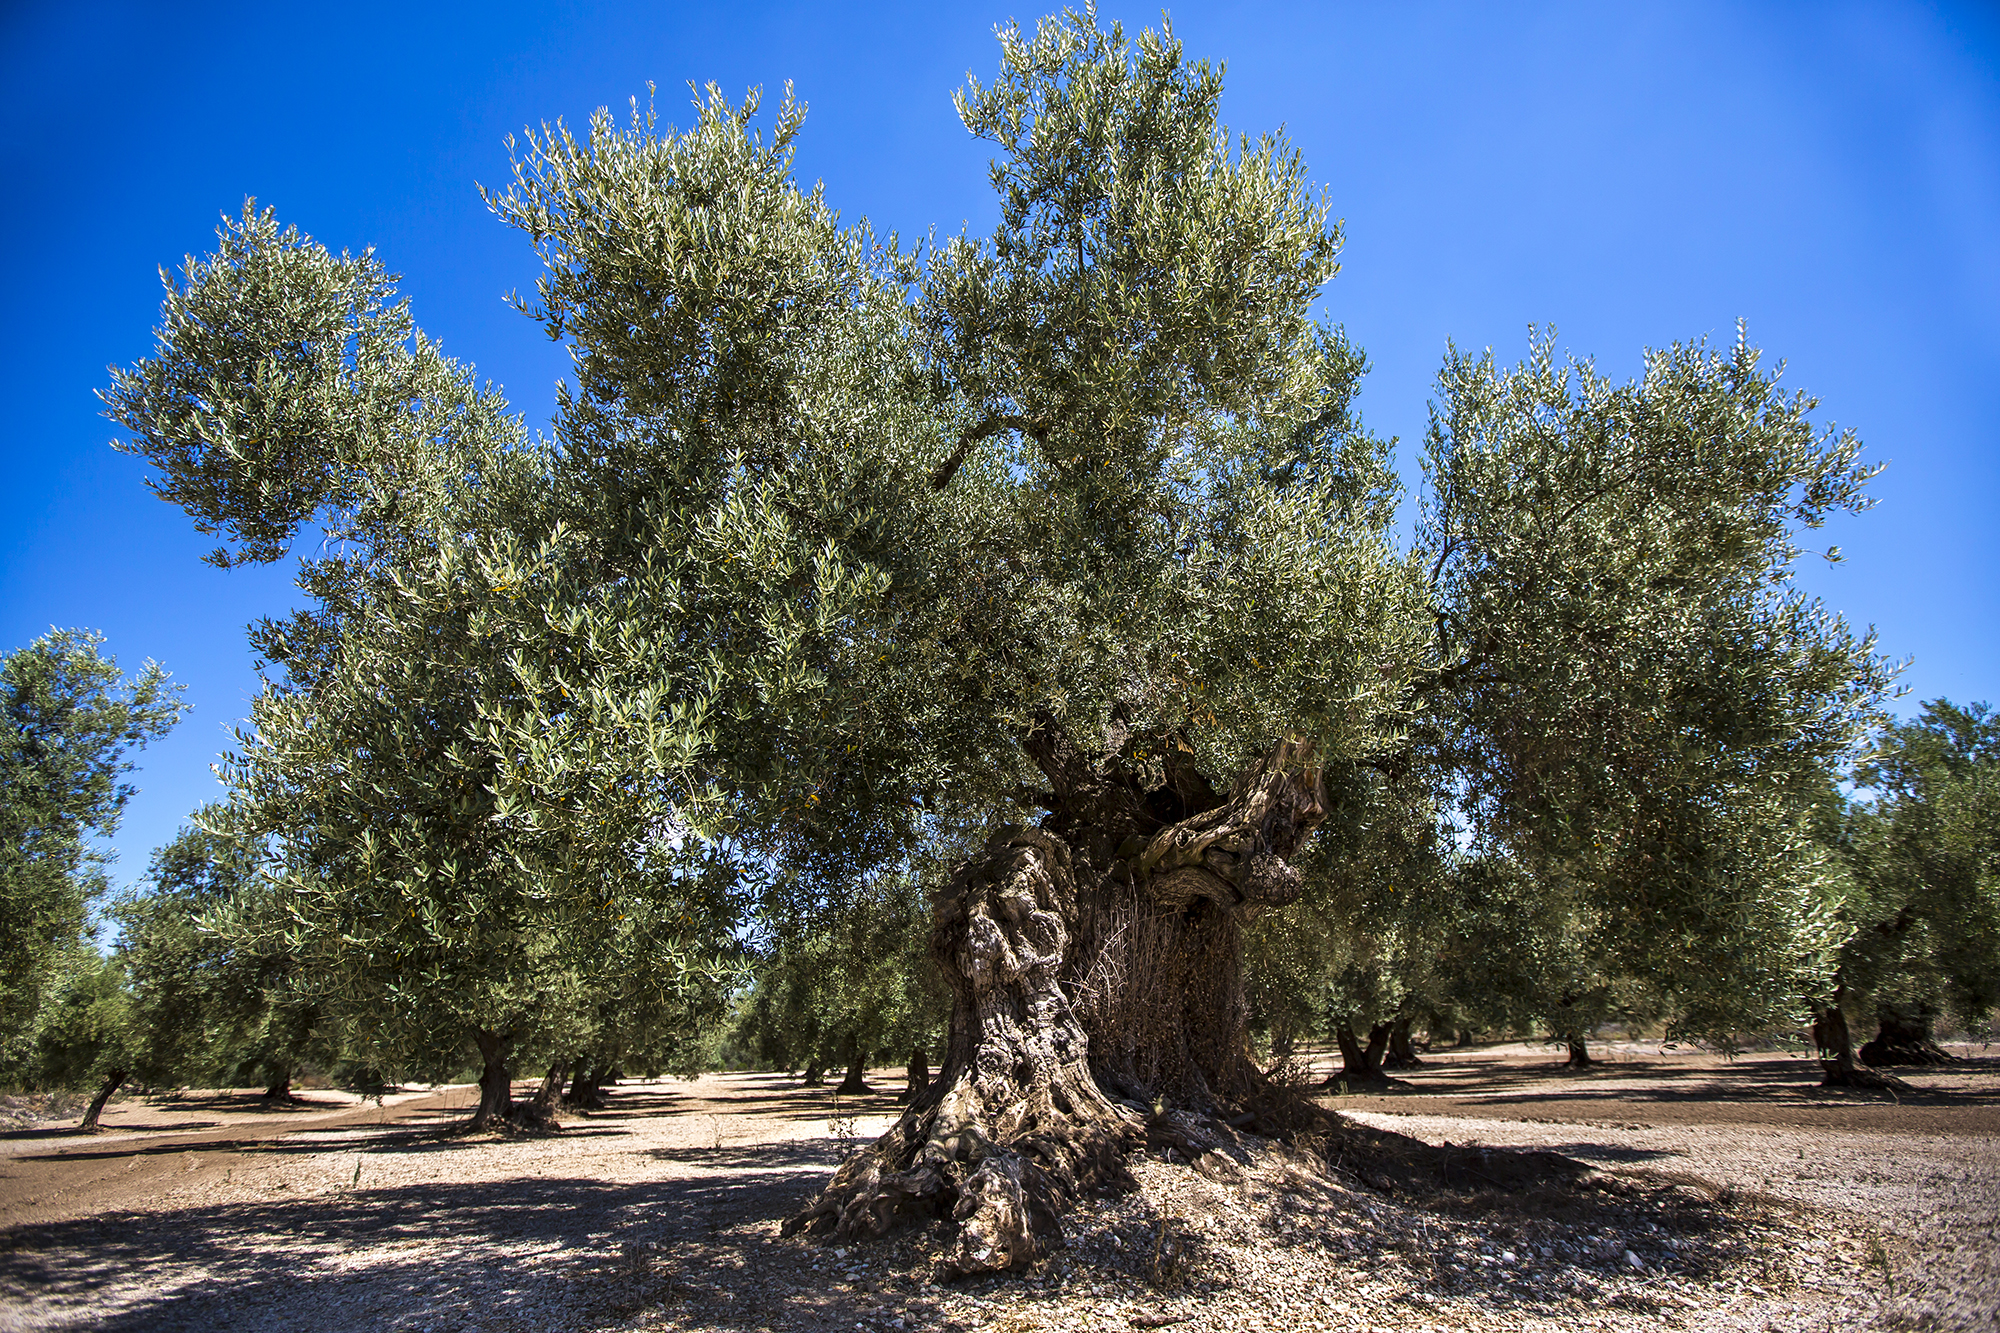 Ancient olive tree